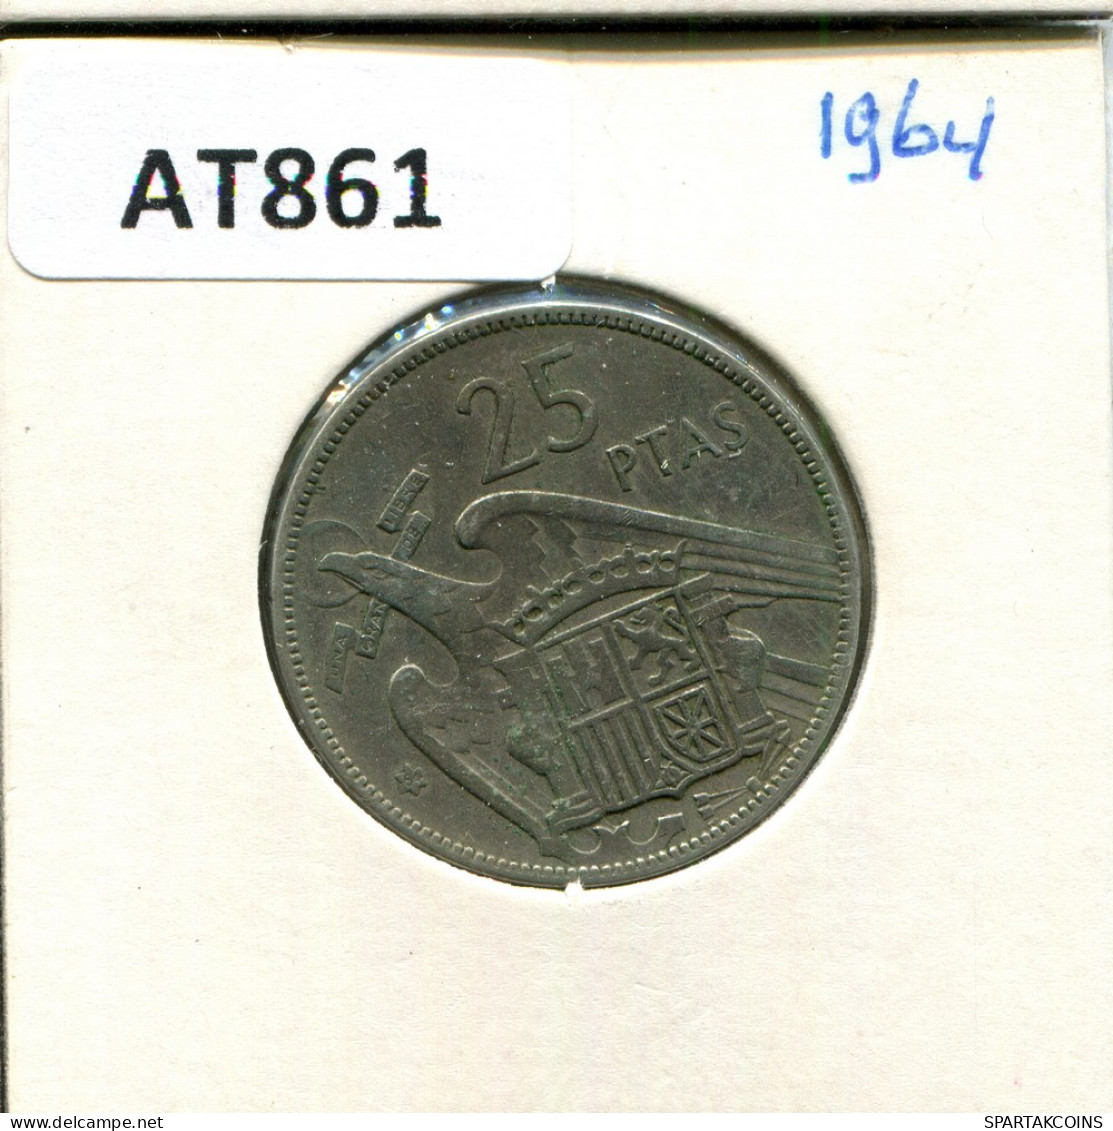 25 PESETAS 1964 SPAIN Coin #AT861.U - 25 Pesetas